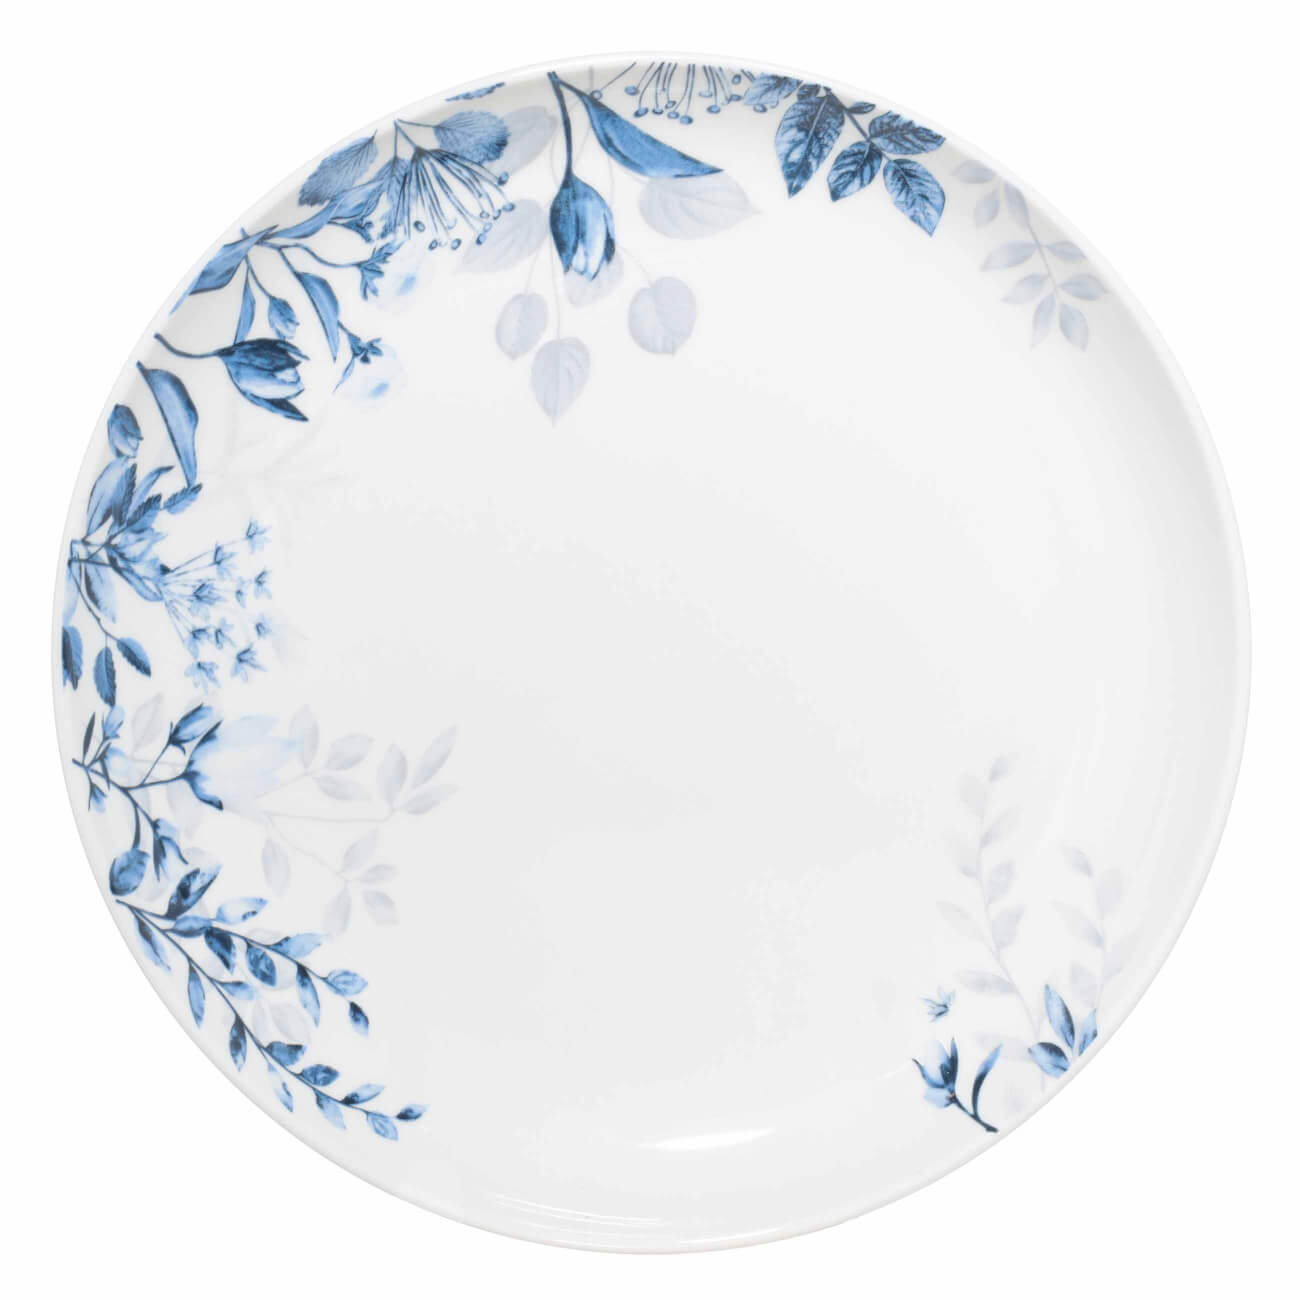 Тарелка обеденная, 27 см, фарфор N, белая, Синие цветы, Royal flower